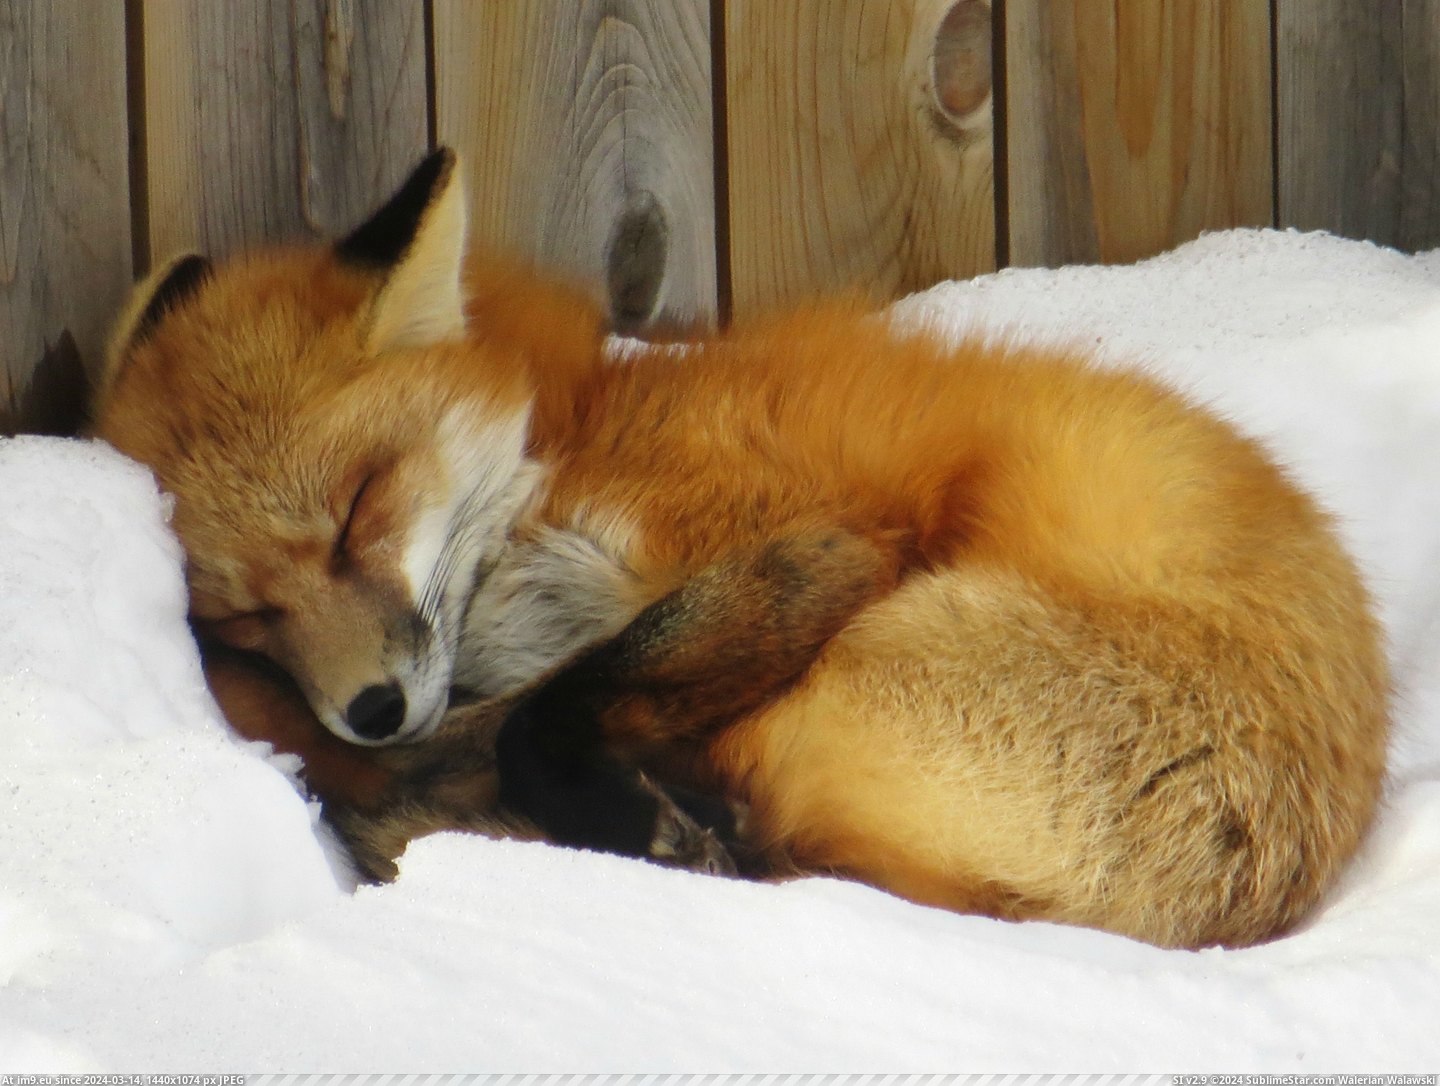 #Red #Canada #Alberta #Backyard #Fox #Sleeping [Pics] Red fox sleeping in my backyard! Alberta, Canada. 1 Pic. (Obraz z album My r/PICS favs))